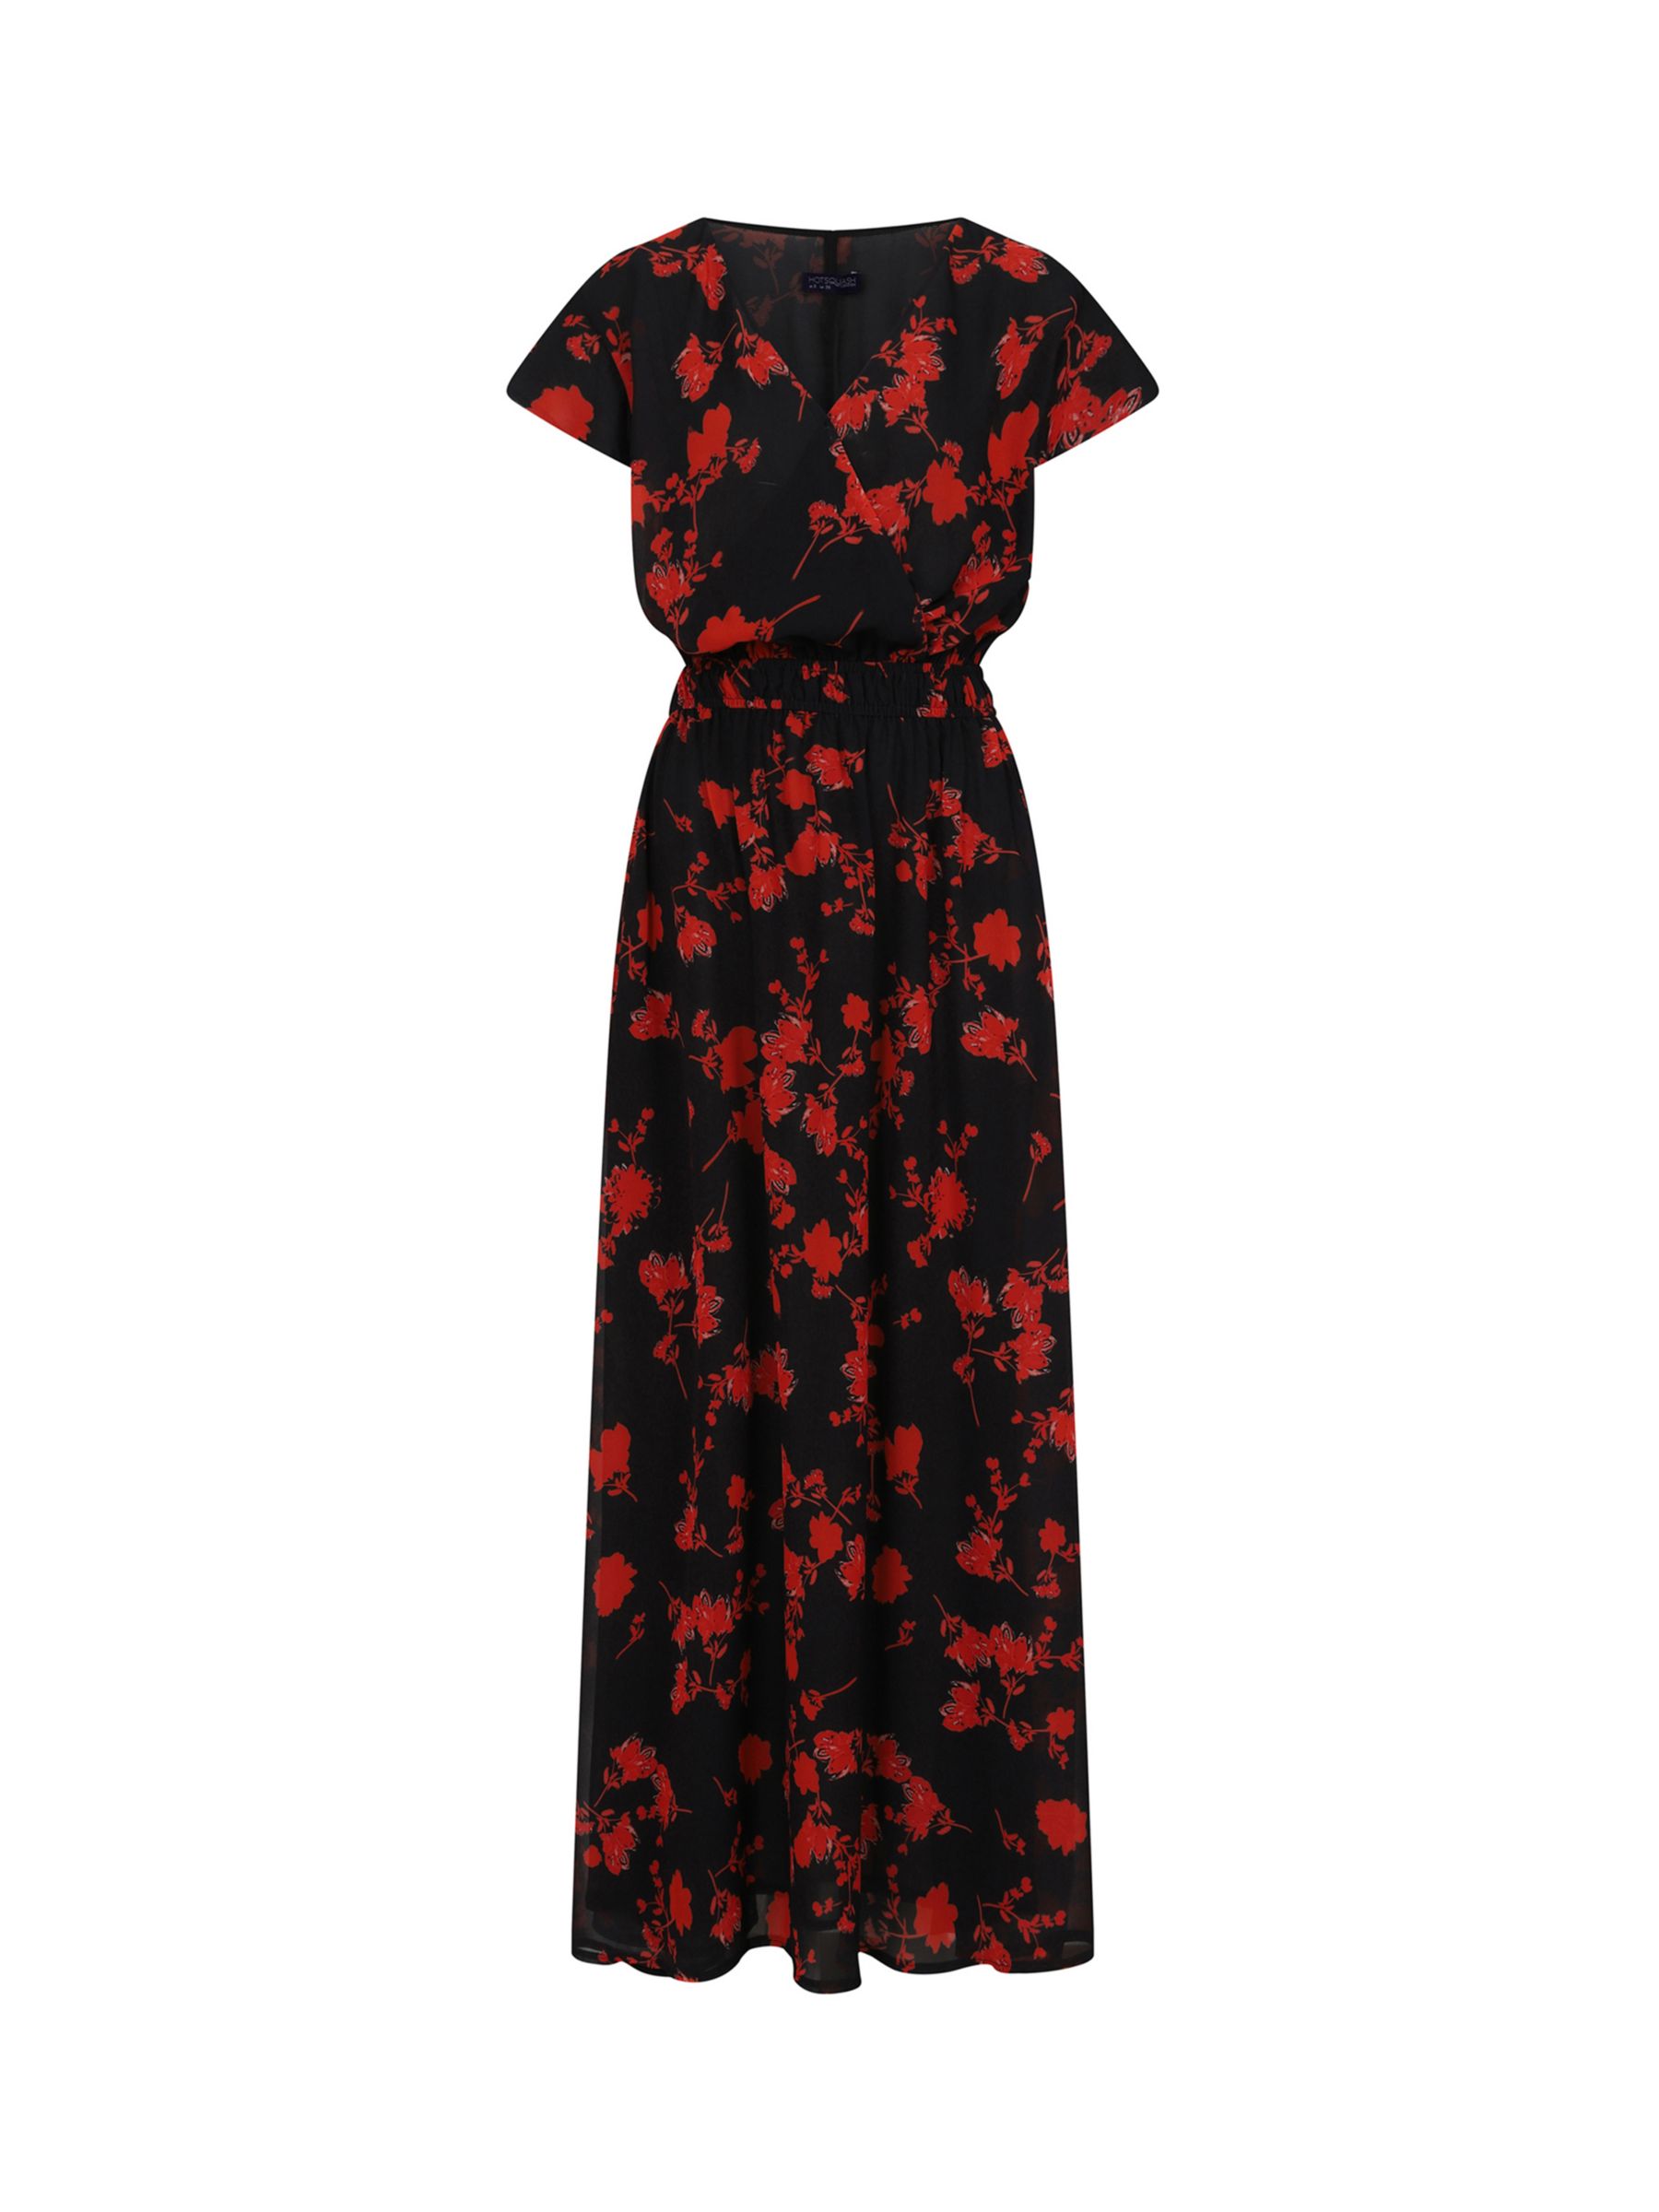 HotSquash Petite Chiffon Floral Print Midi Dress, Red/Black, 8